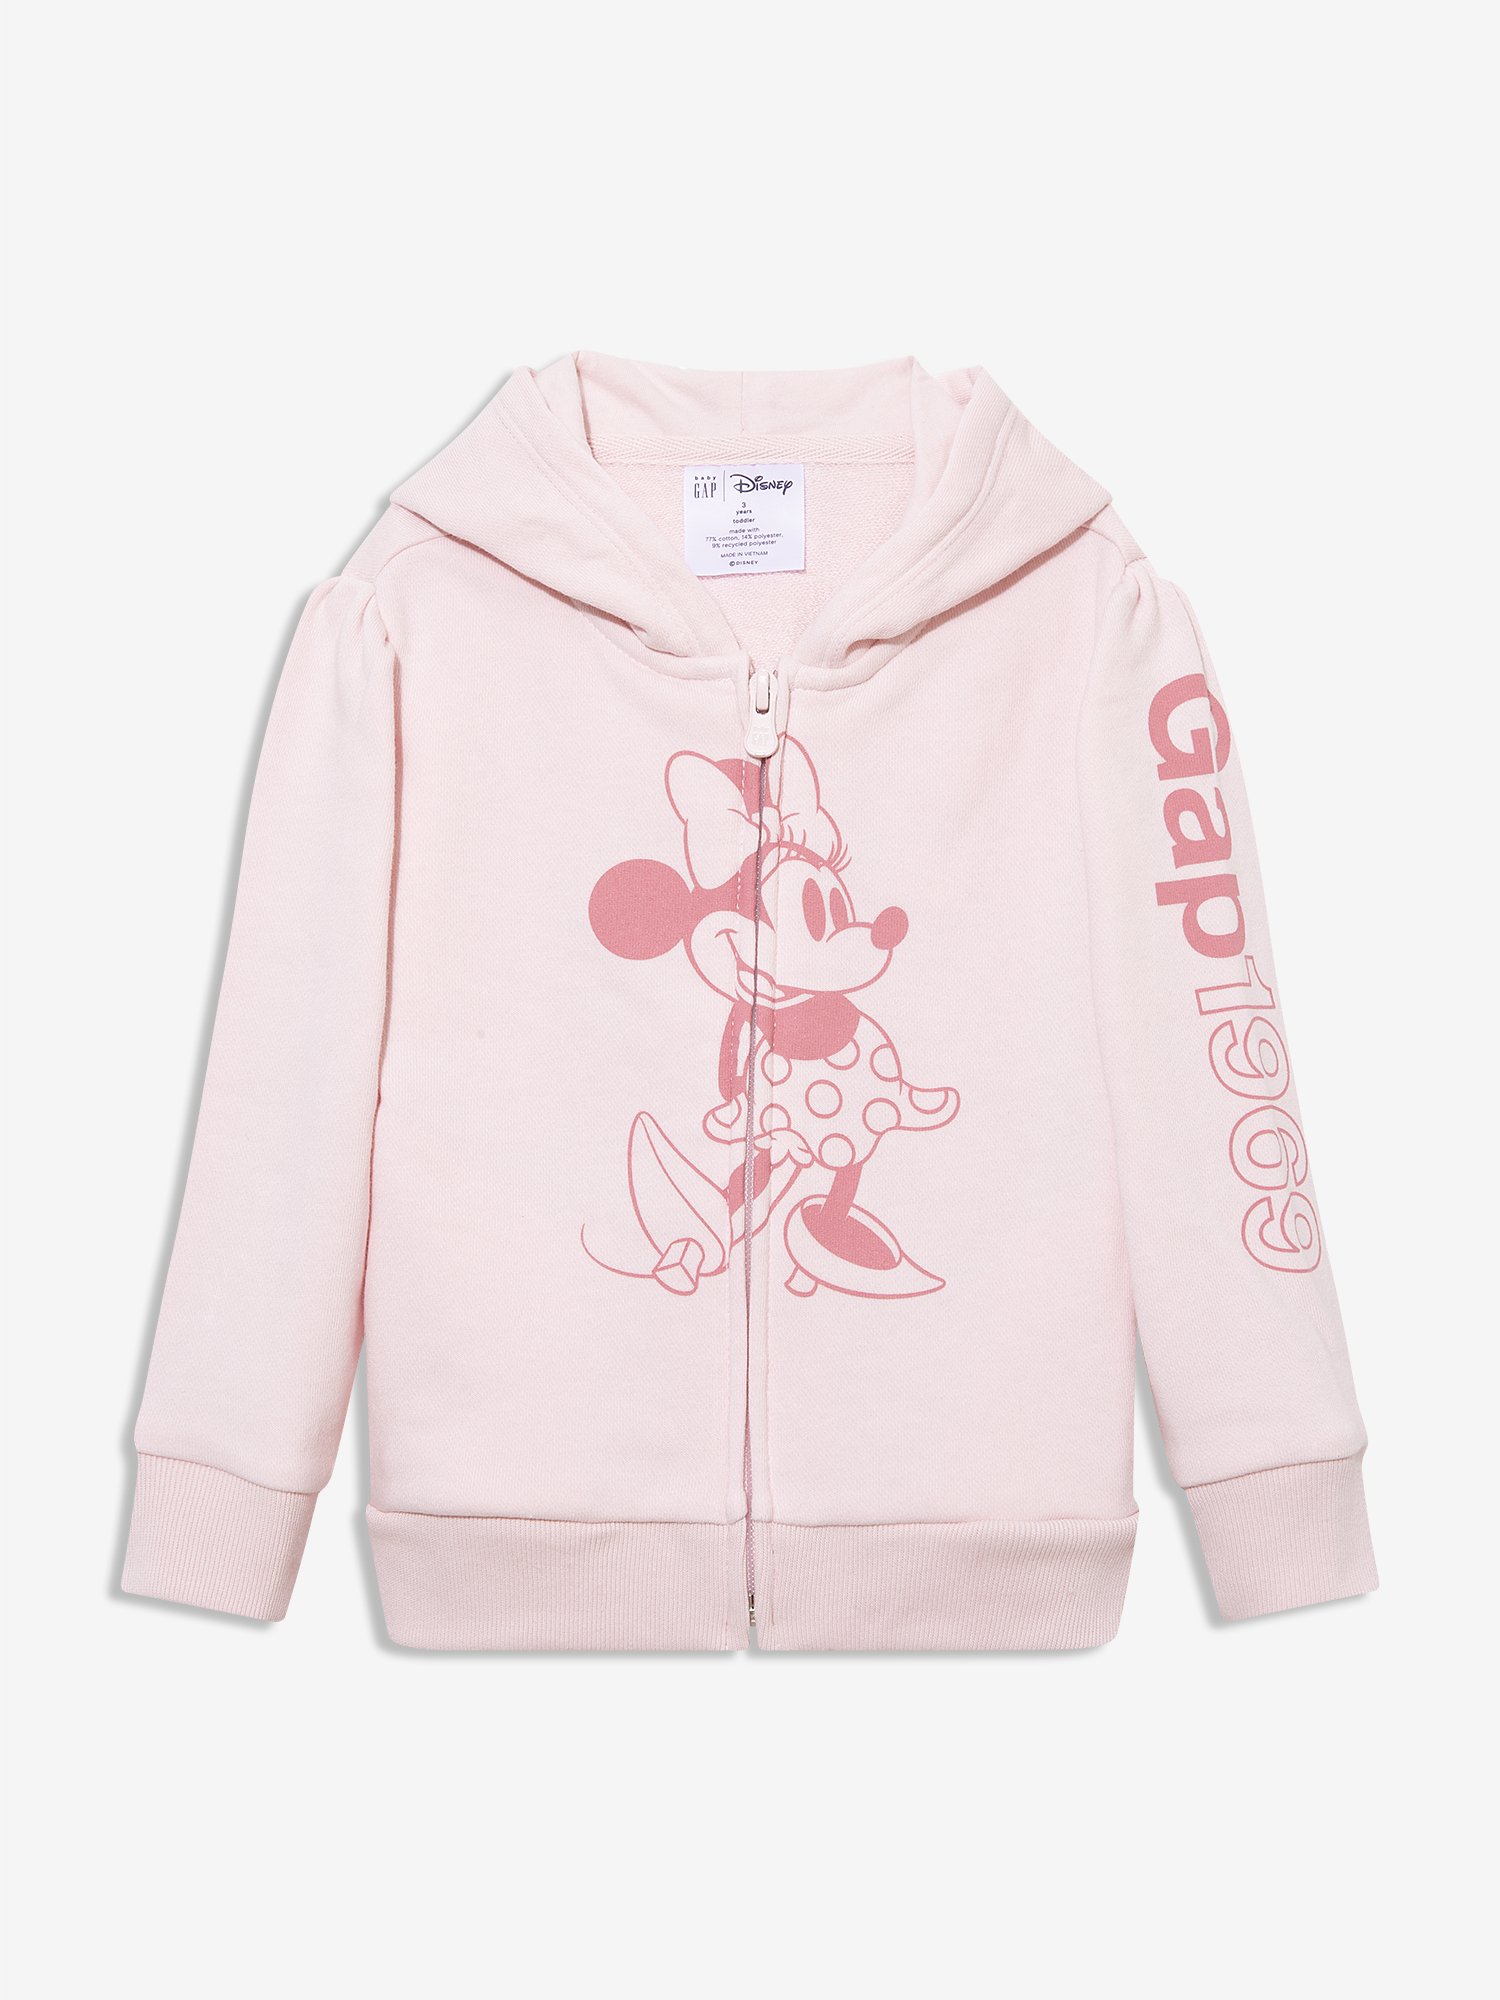 Gap Logo Minnie Mouse Sweatshirt product image